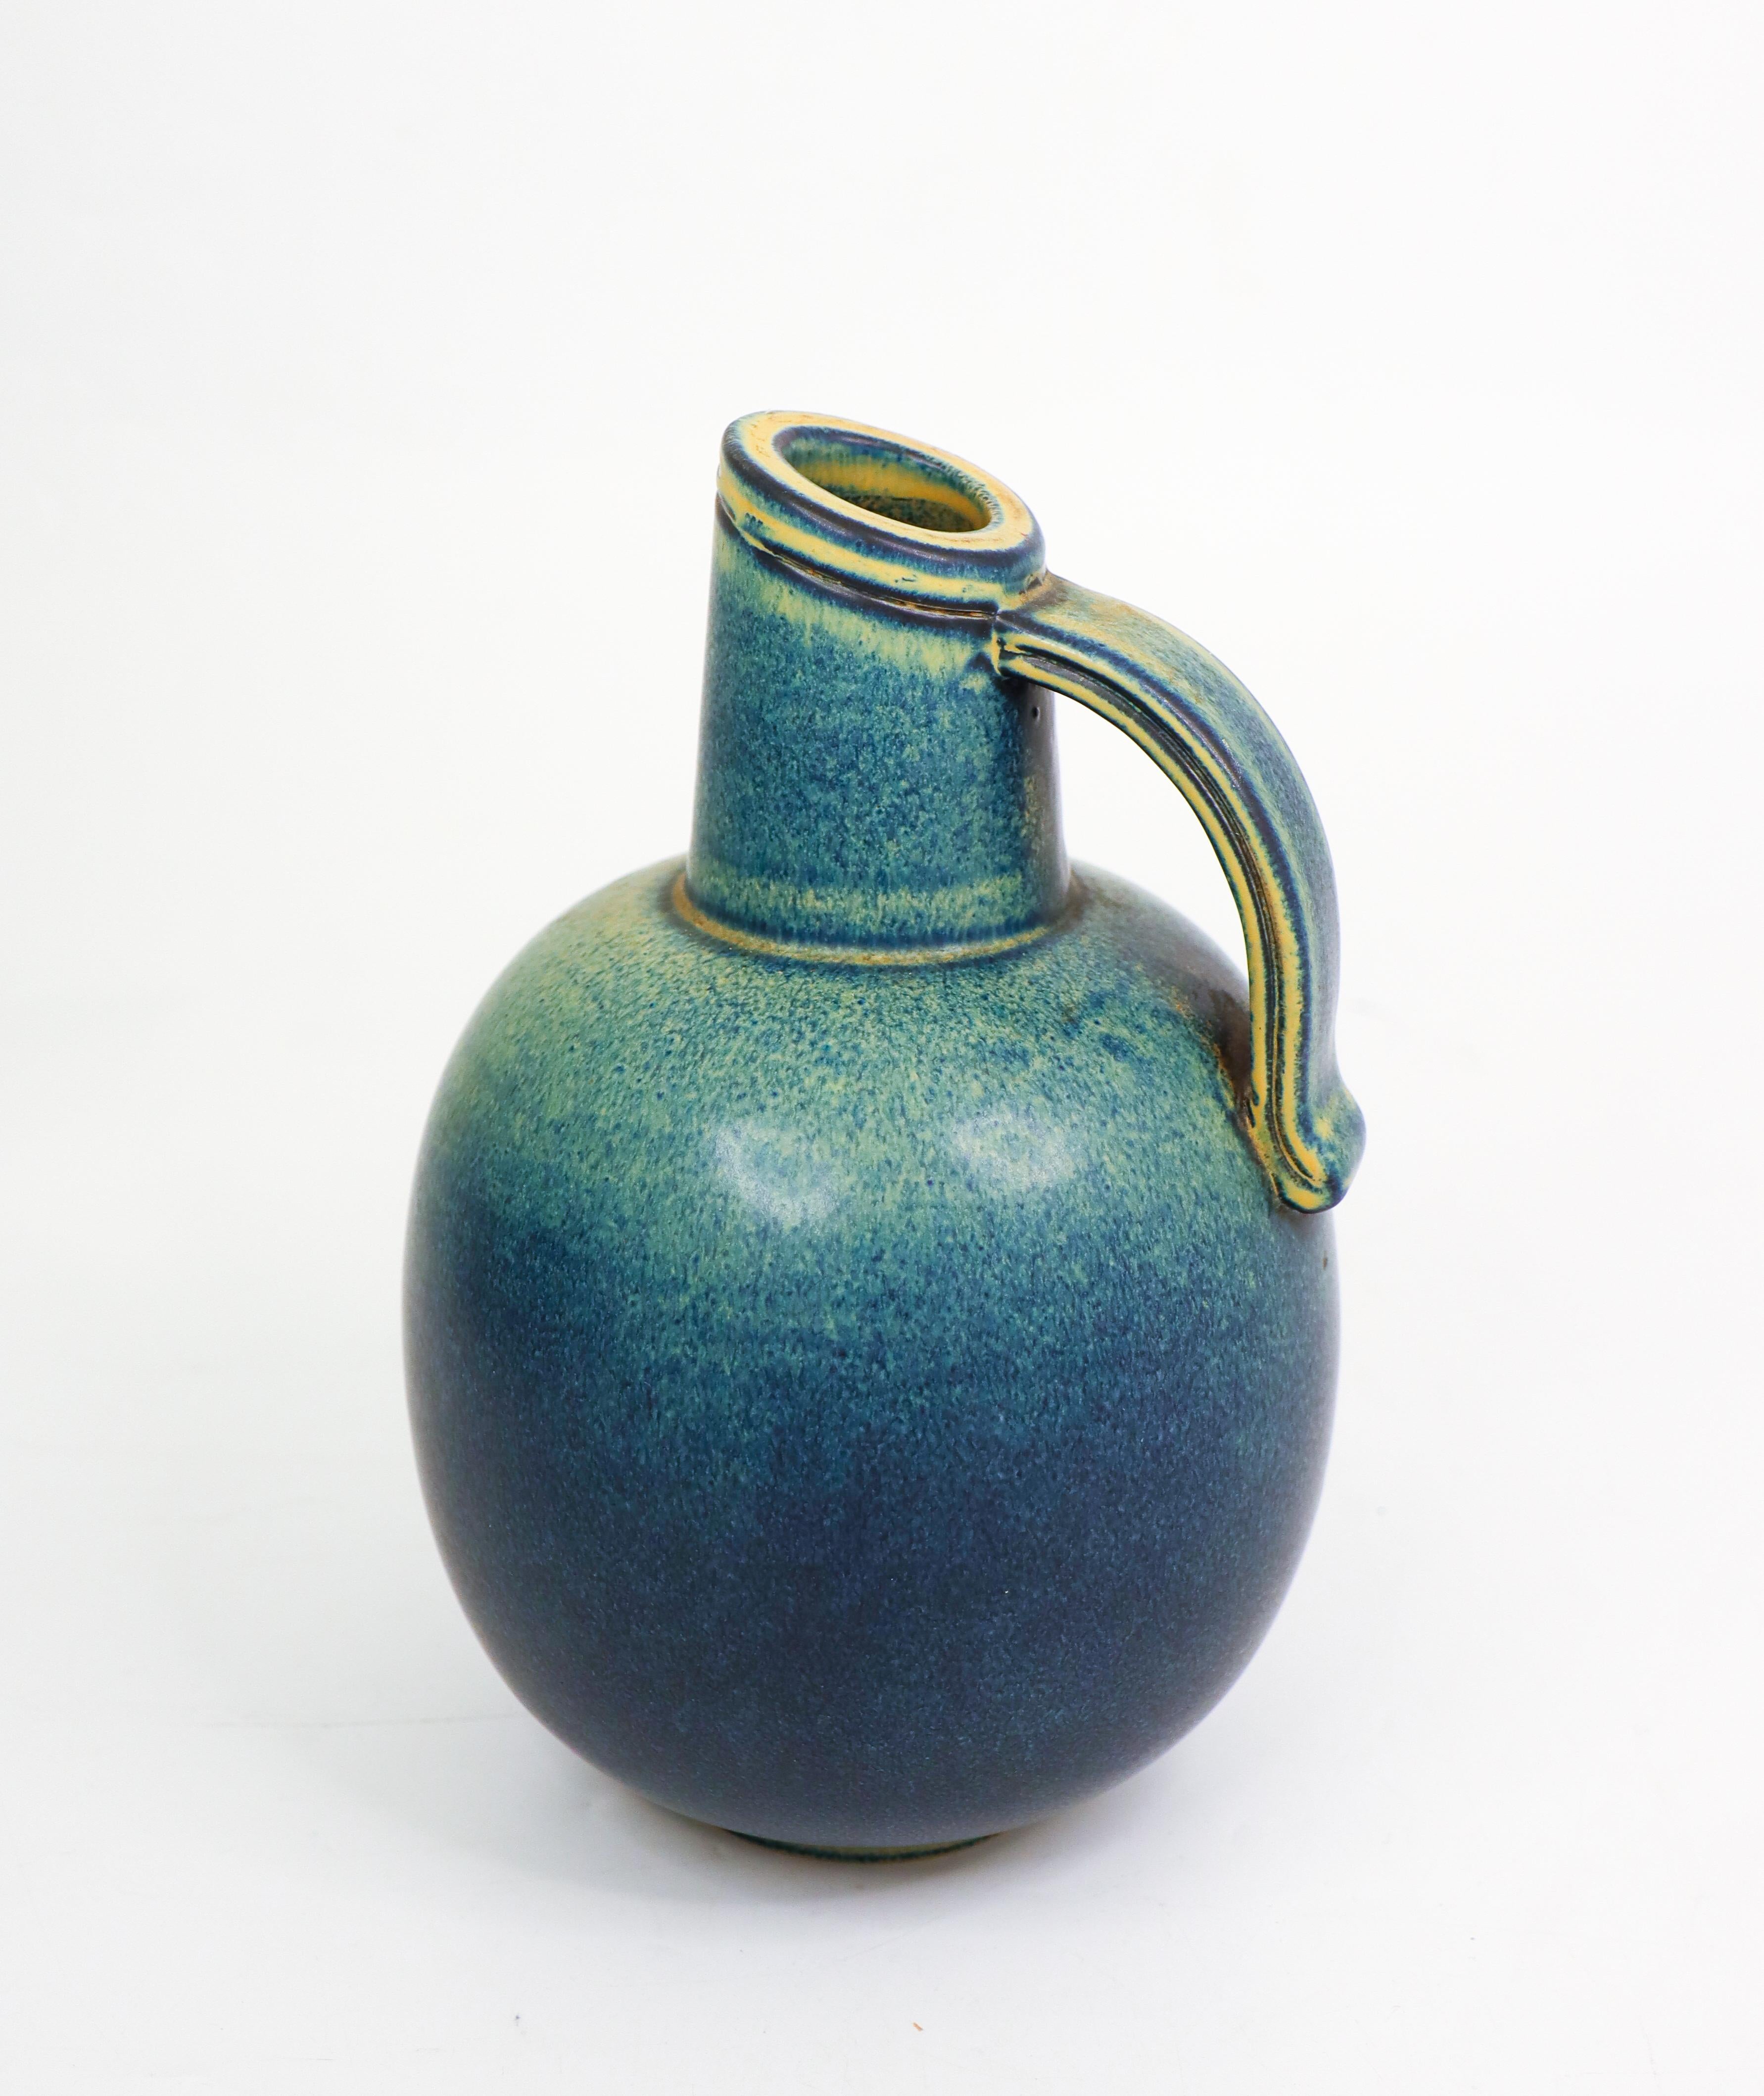 A blue & green ceramic vase designed by Gunnar Nylund at Rörstrand. It is 17.5 cm (7